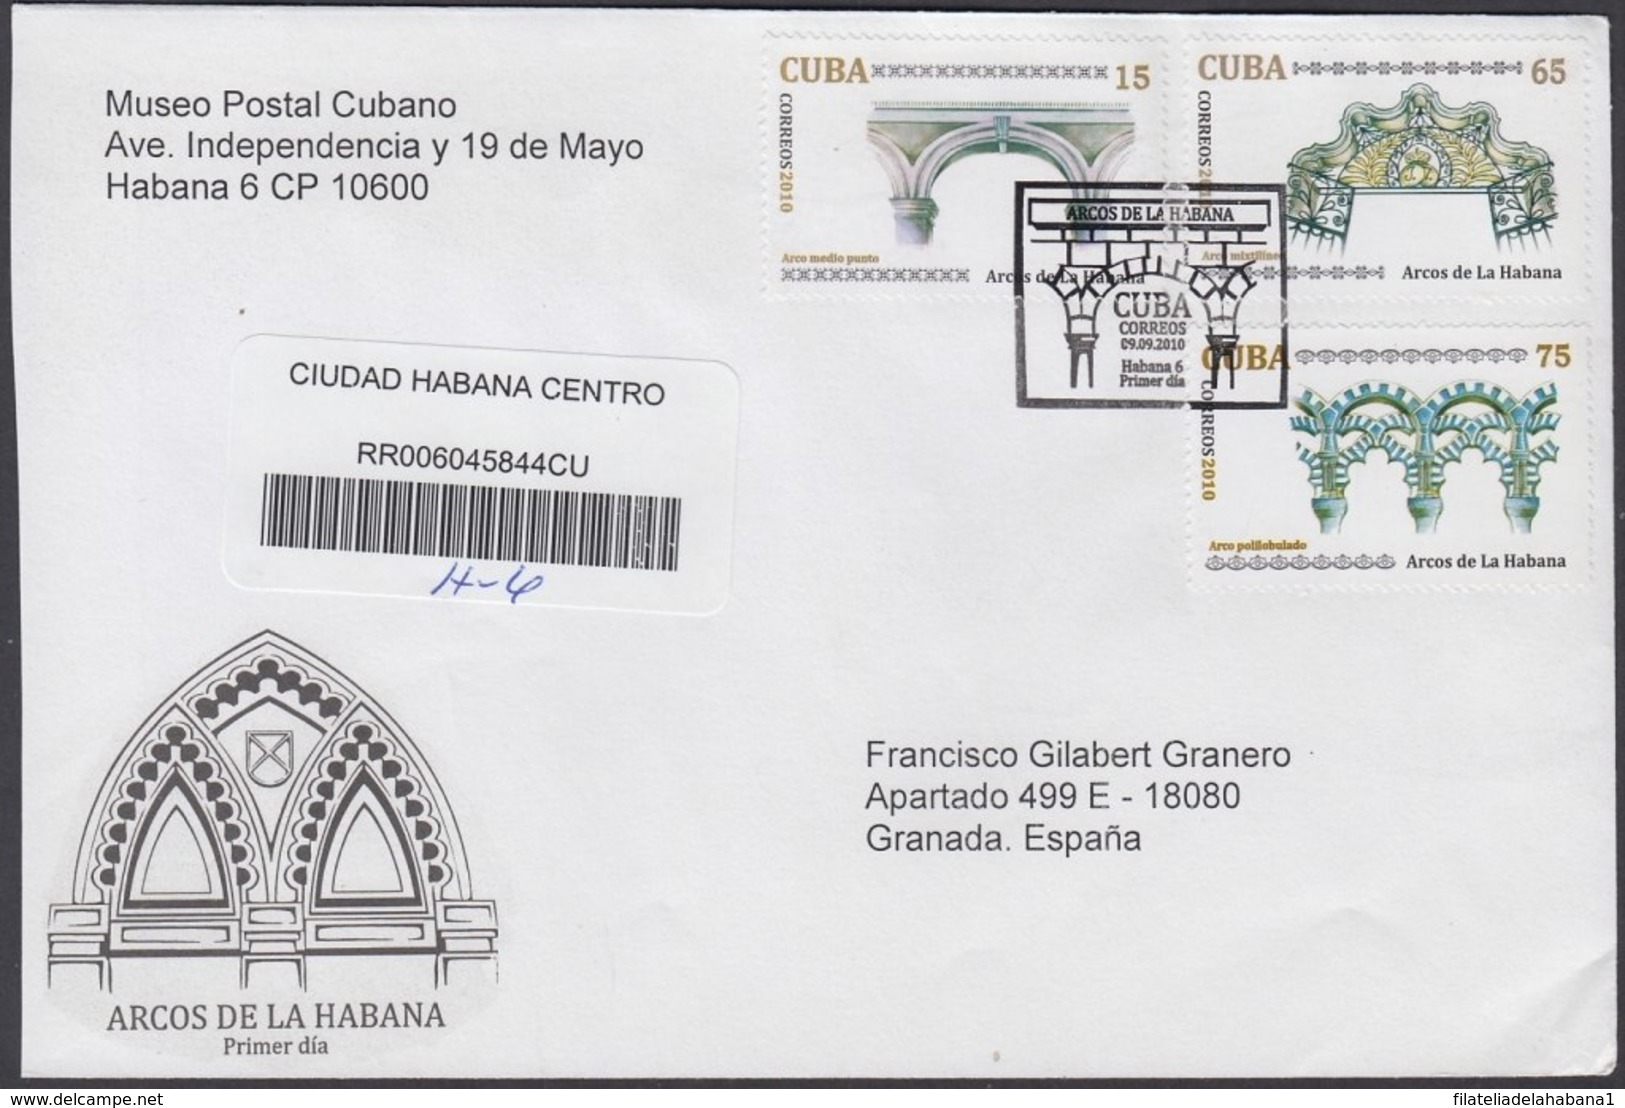 2010-FDC-86 CUBA FDC 2010. REGISTERED COVER TO SPAIN. ARCOS DE LA HABANA, ARQUITECTURA, ARCHITECTURE. - FDC